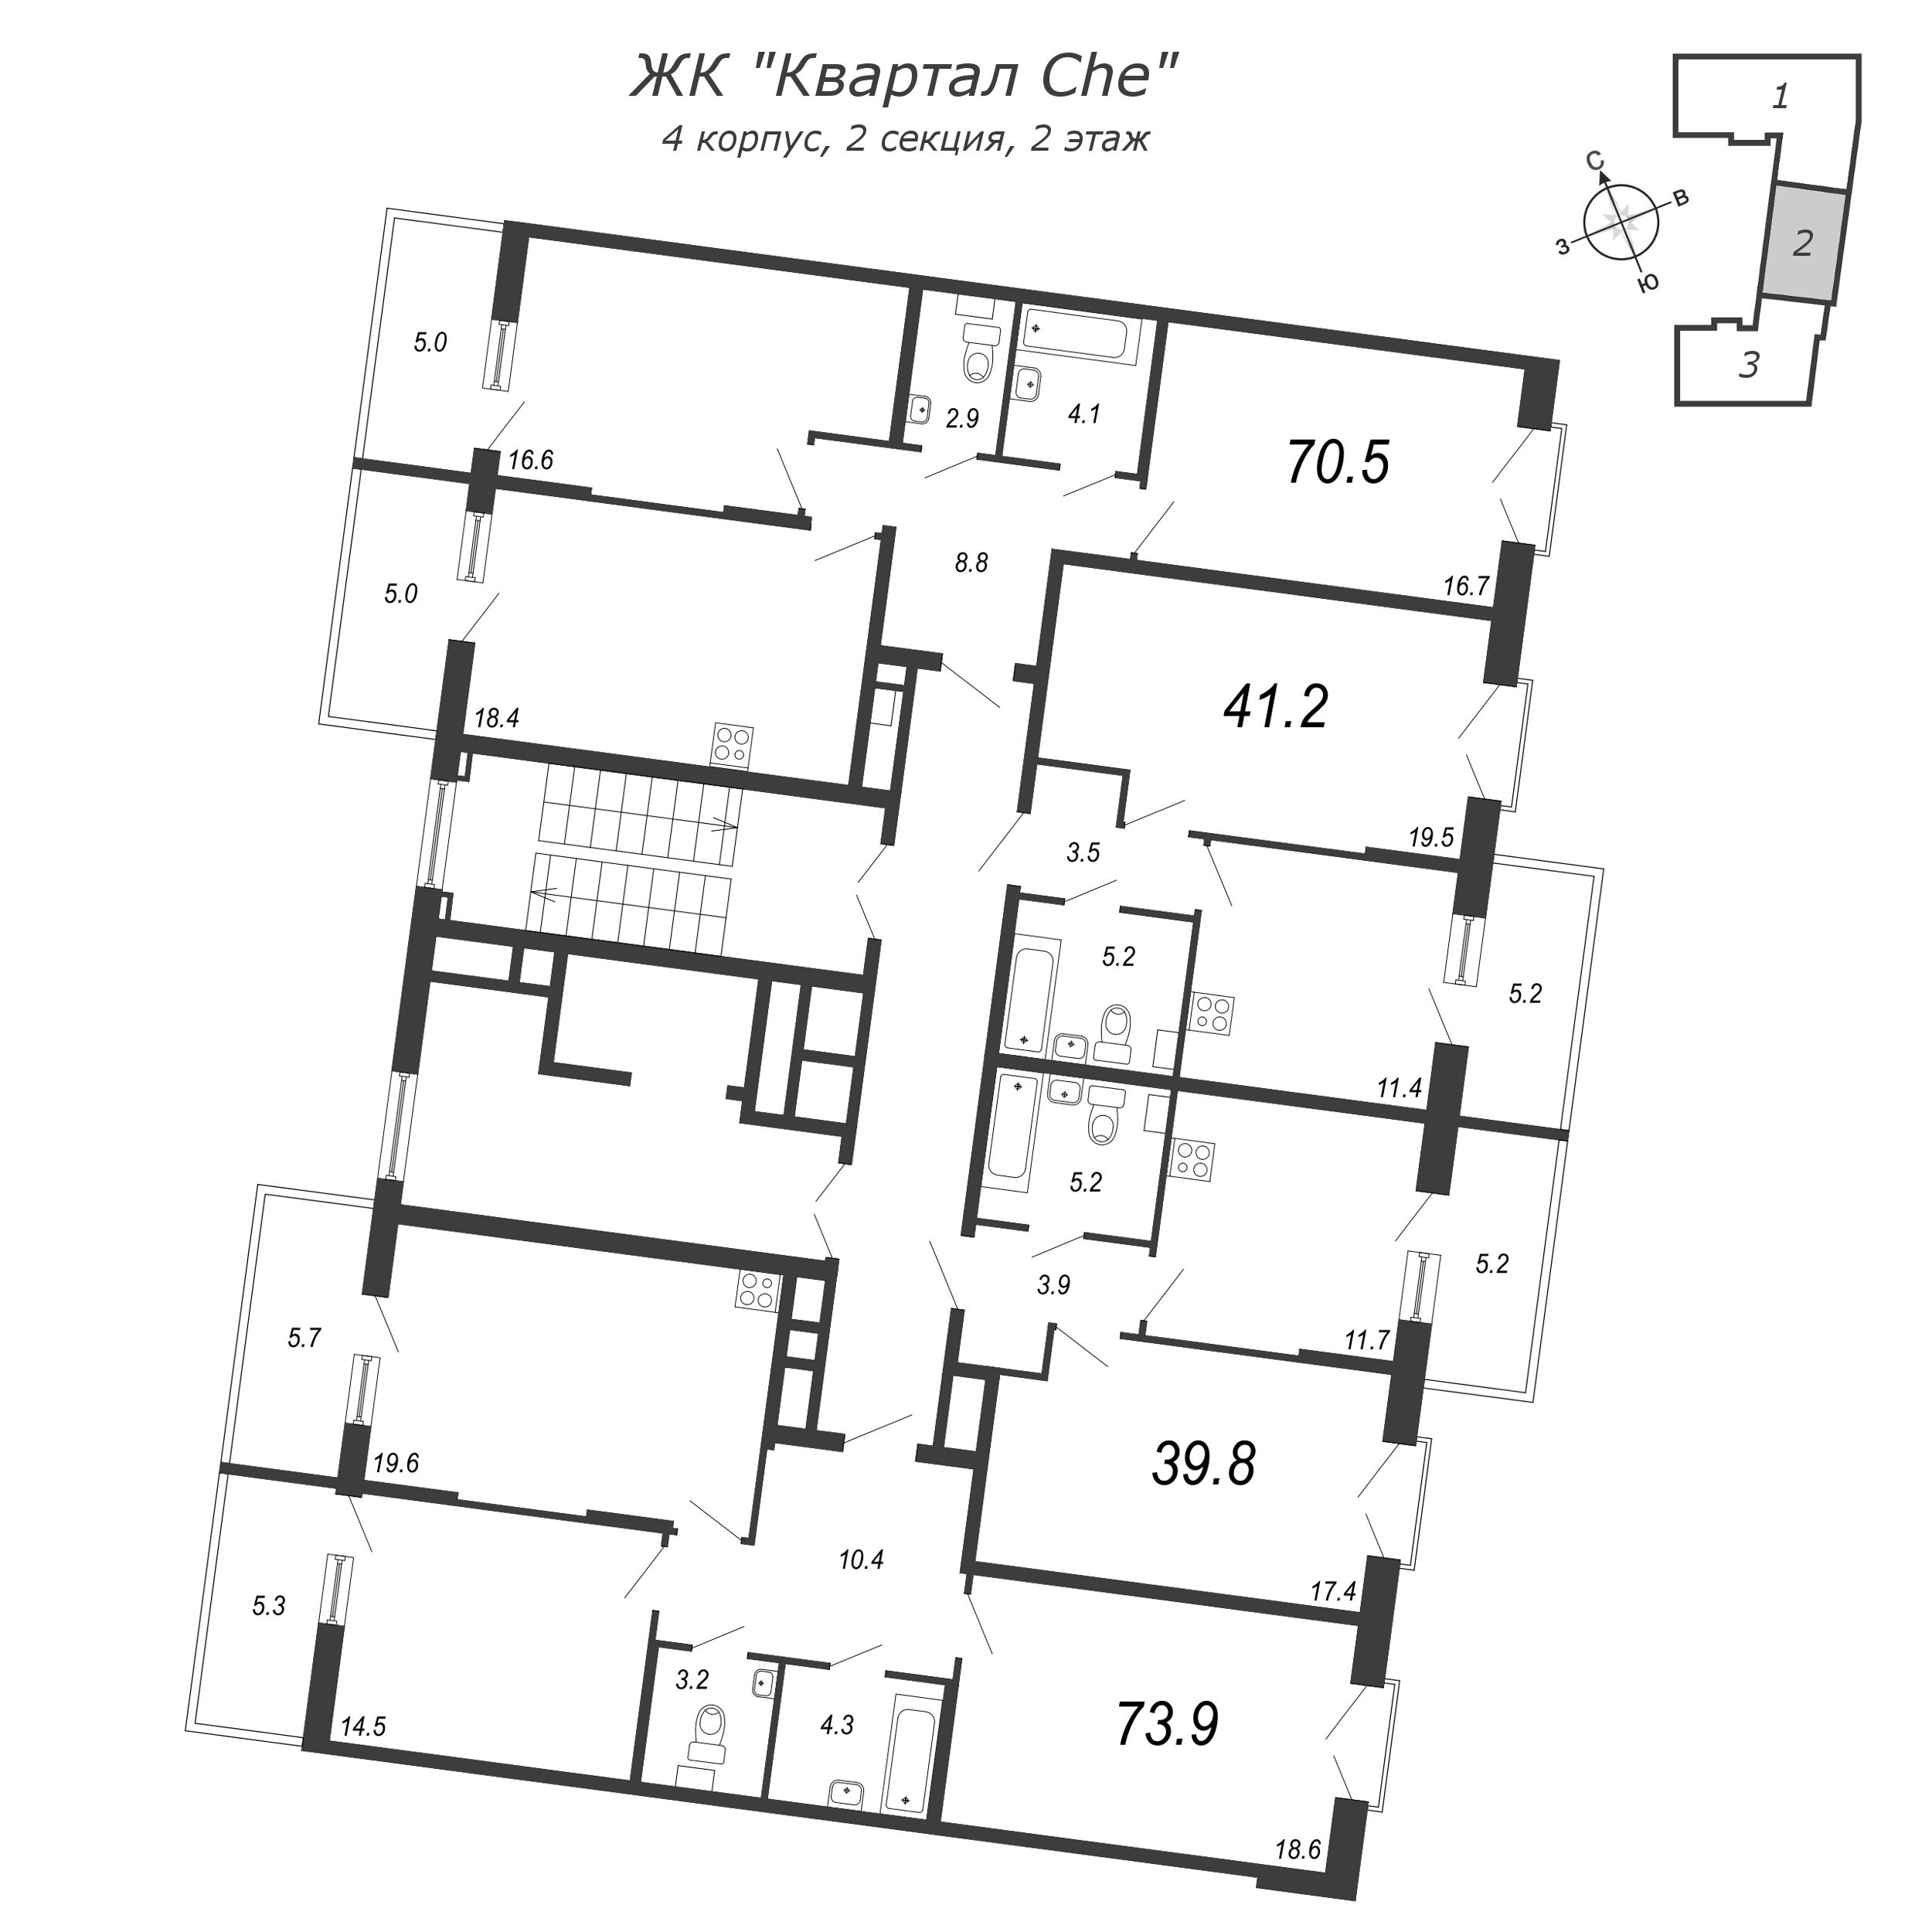 2-комнатная квартира, 70.5 м² в ЖК "Квартал Che" - планировка этажа